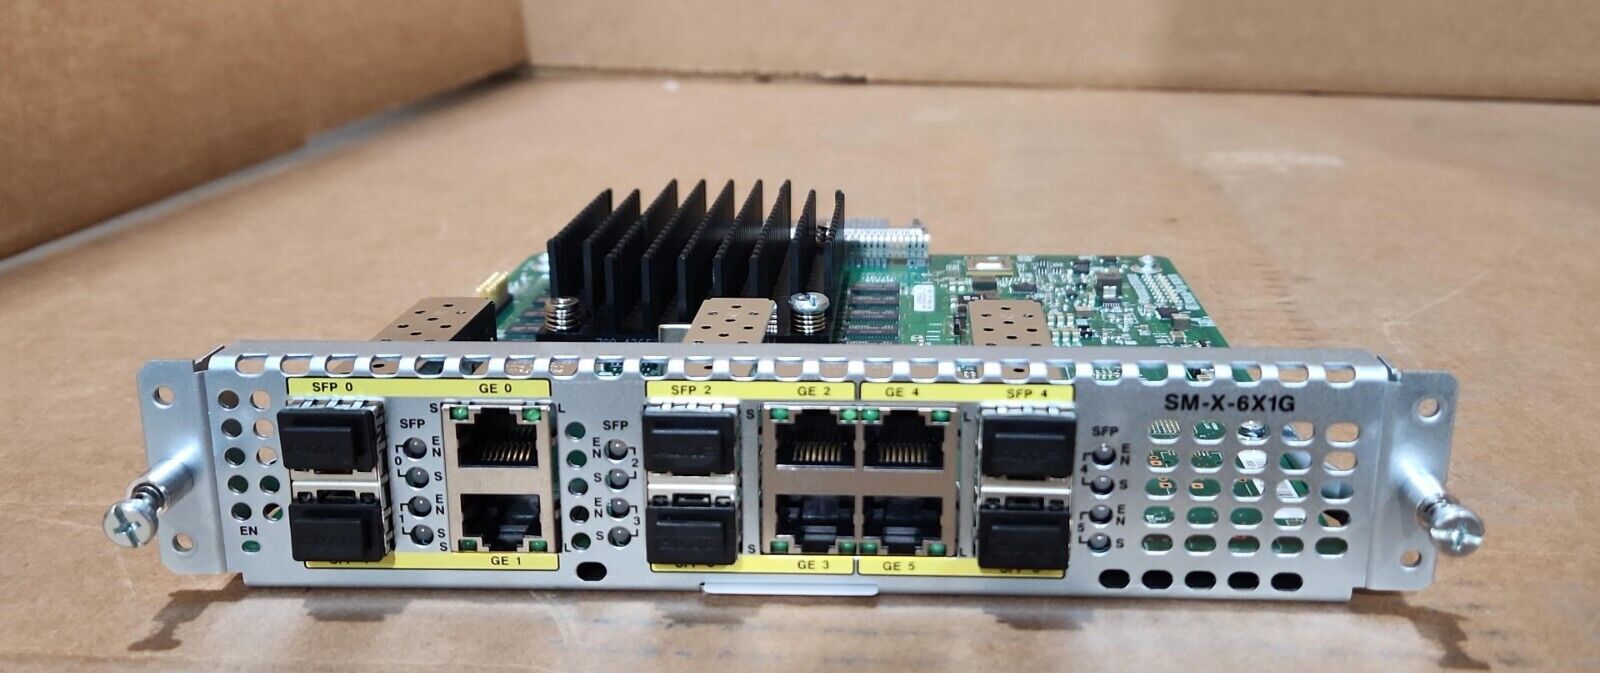 Cisco SM-X-6X1G 6 Port SFP Gigabit Ethernet Dual Mode ISR4400 4300 Module